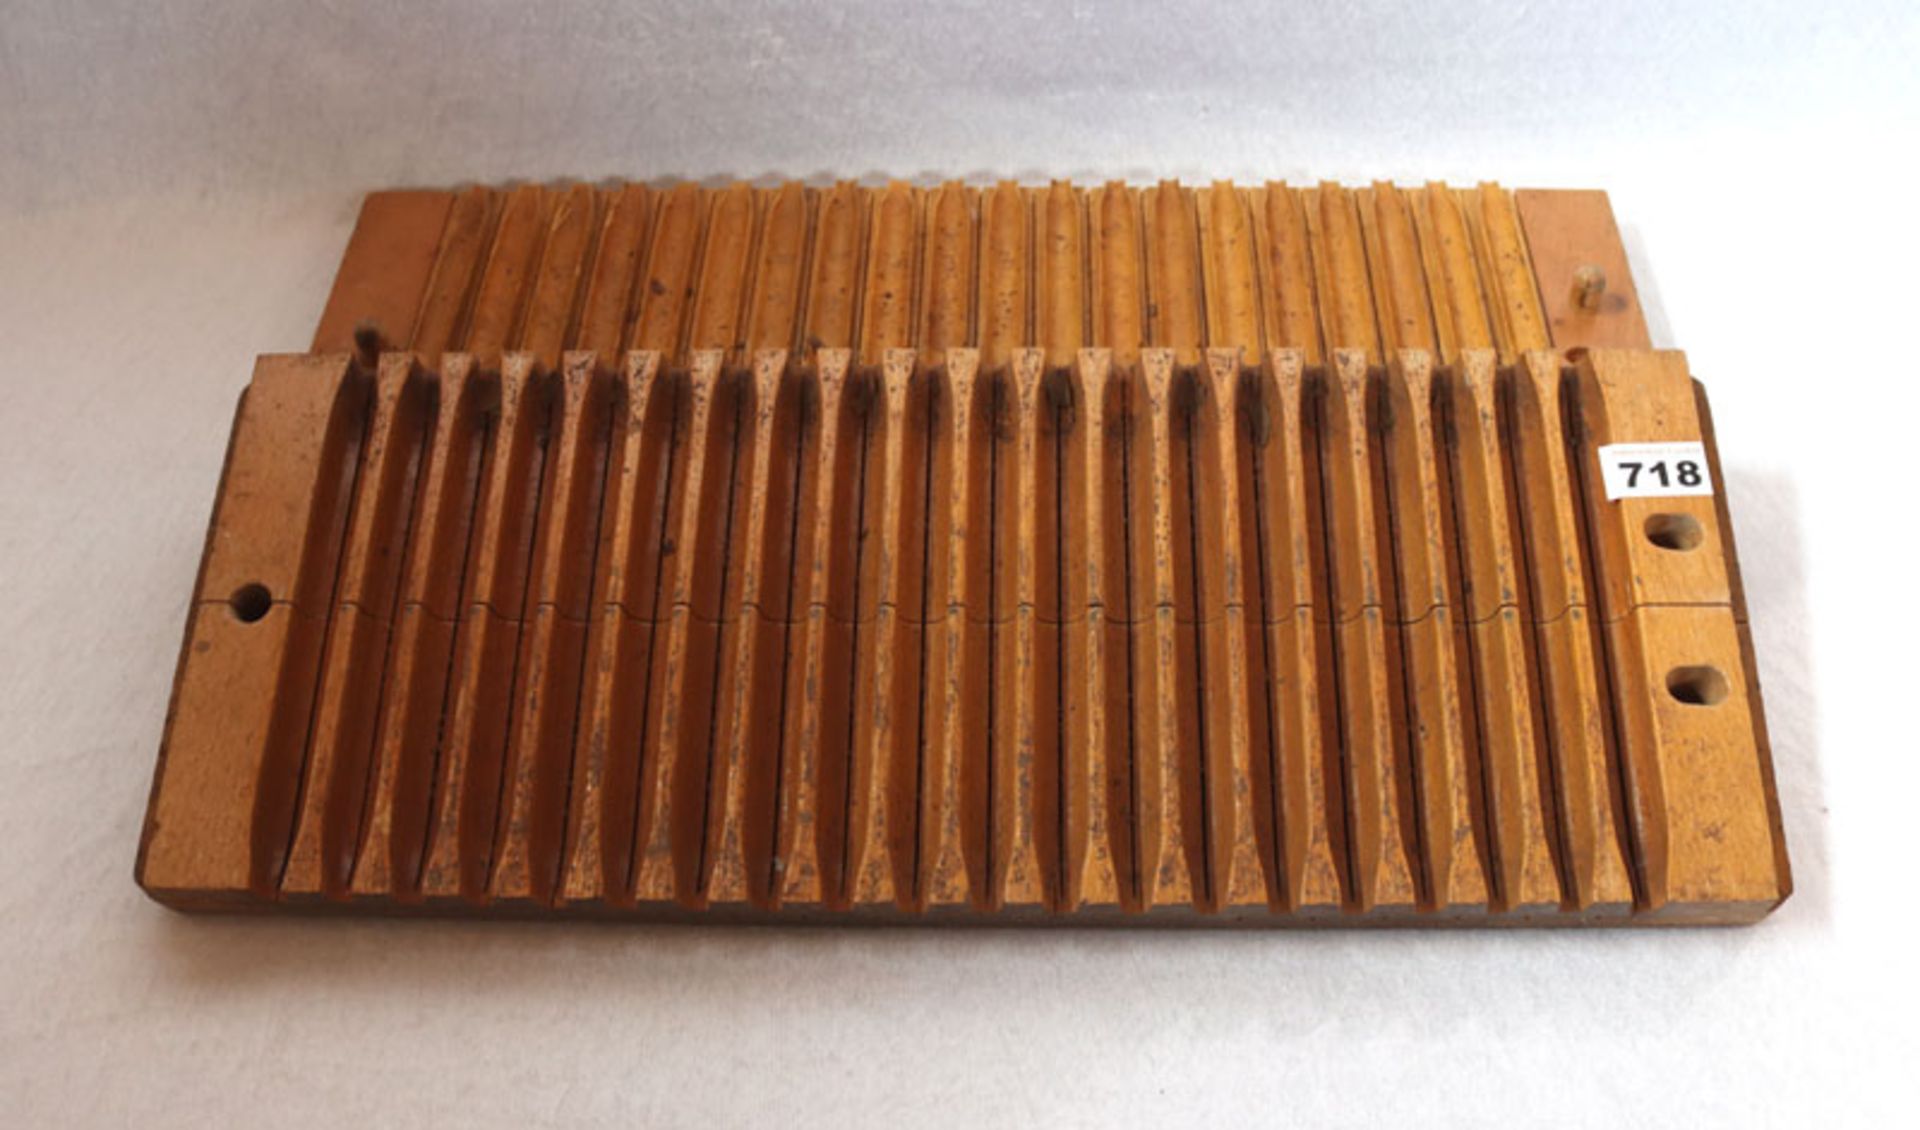 Holz Zigarrenpresse, 2-teilig, altersbedingter Zustand, H 7 cm, B 56 cm, T 21 cm